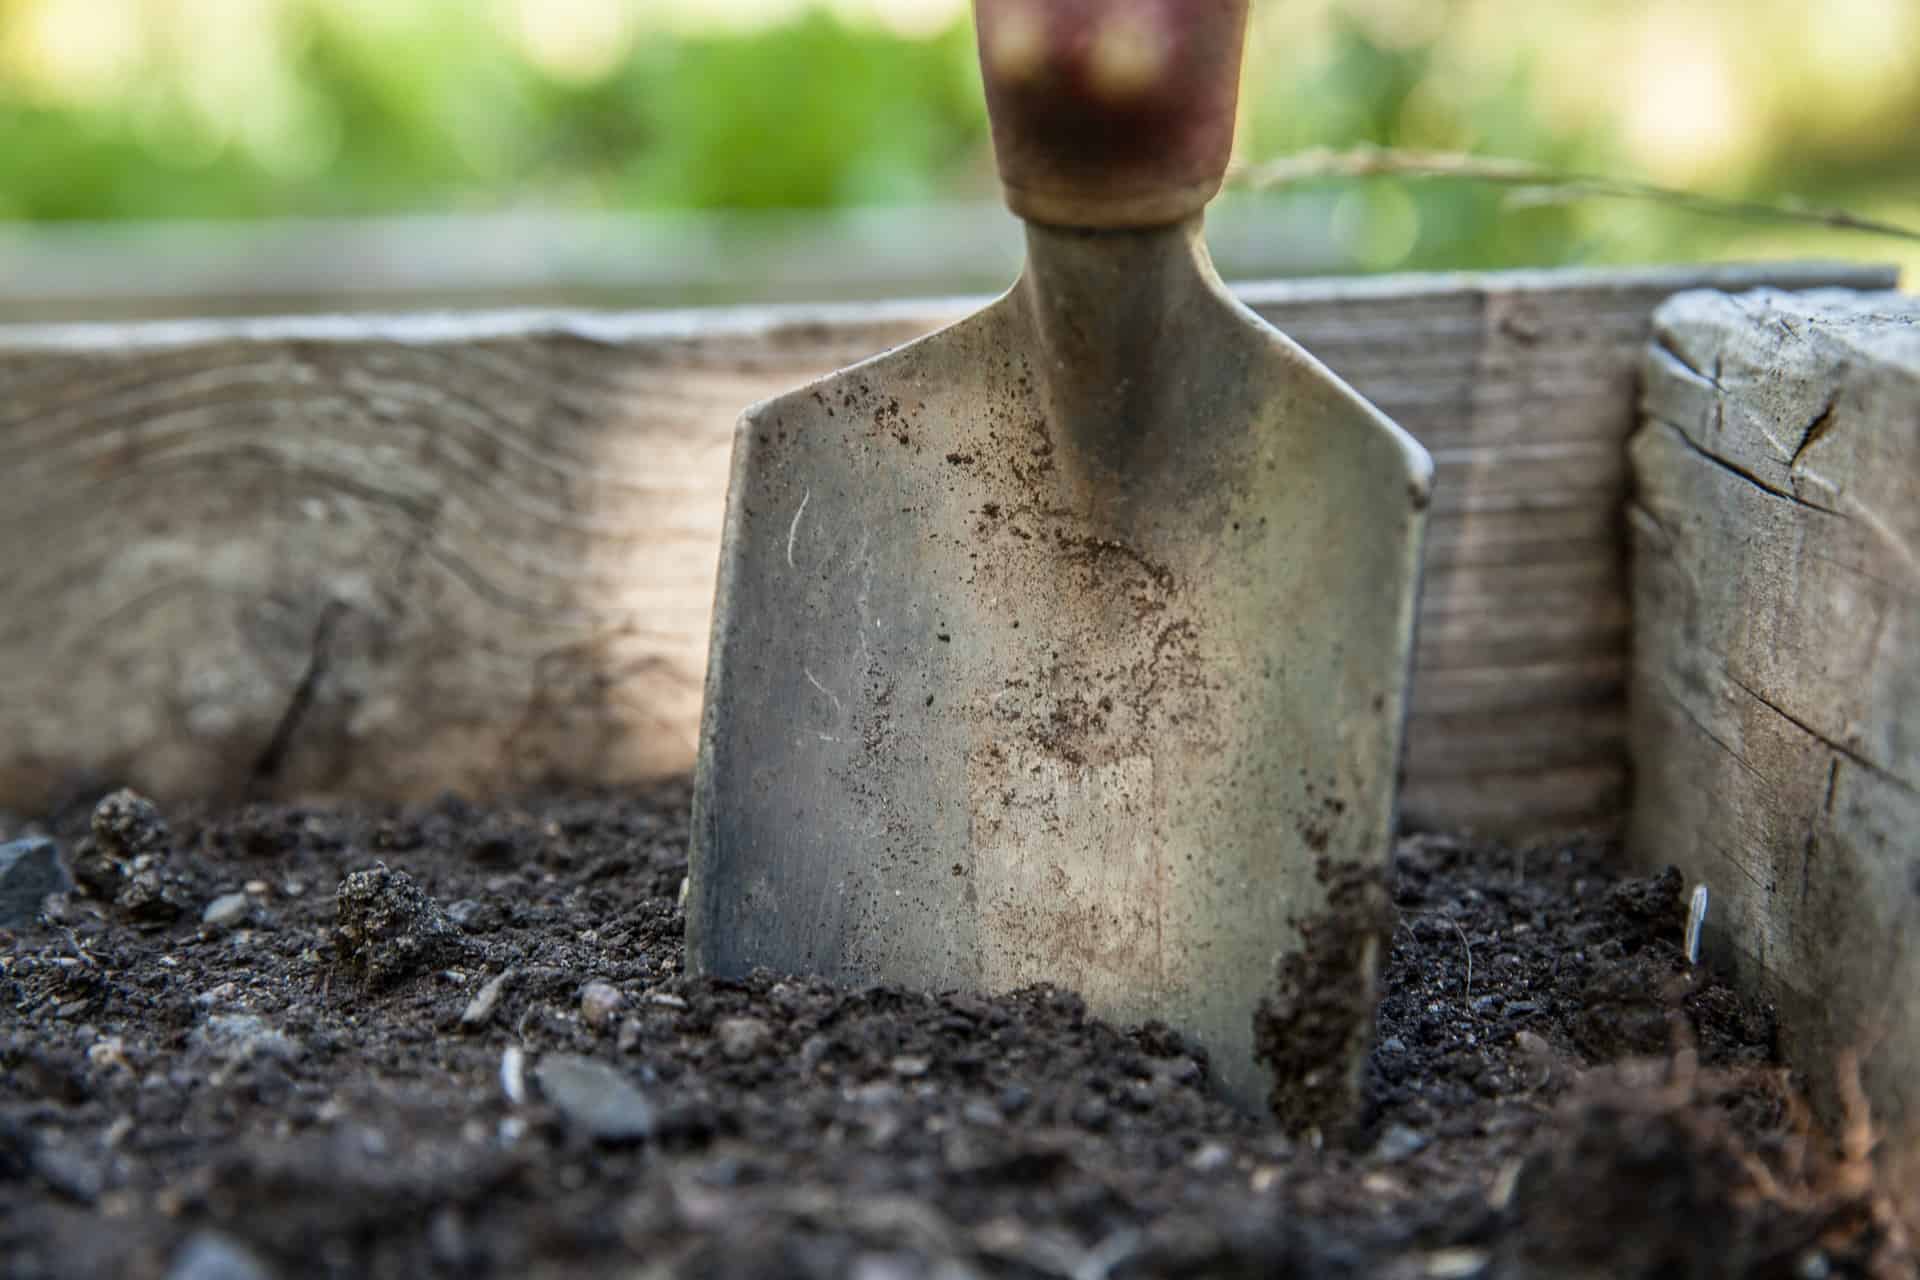 A garden shovel for digging tomato plants.